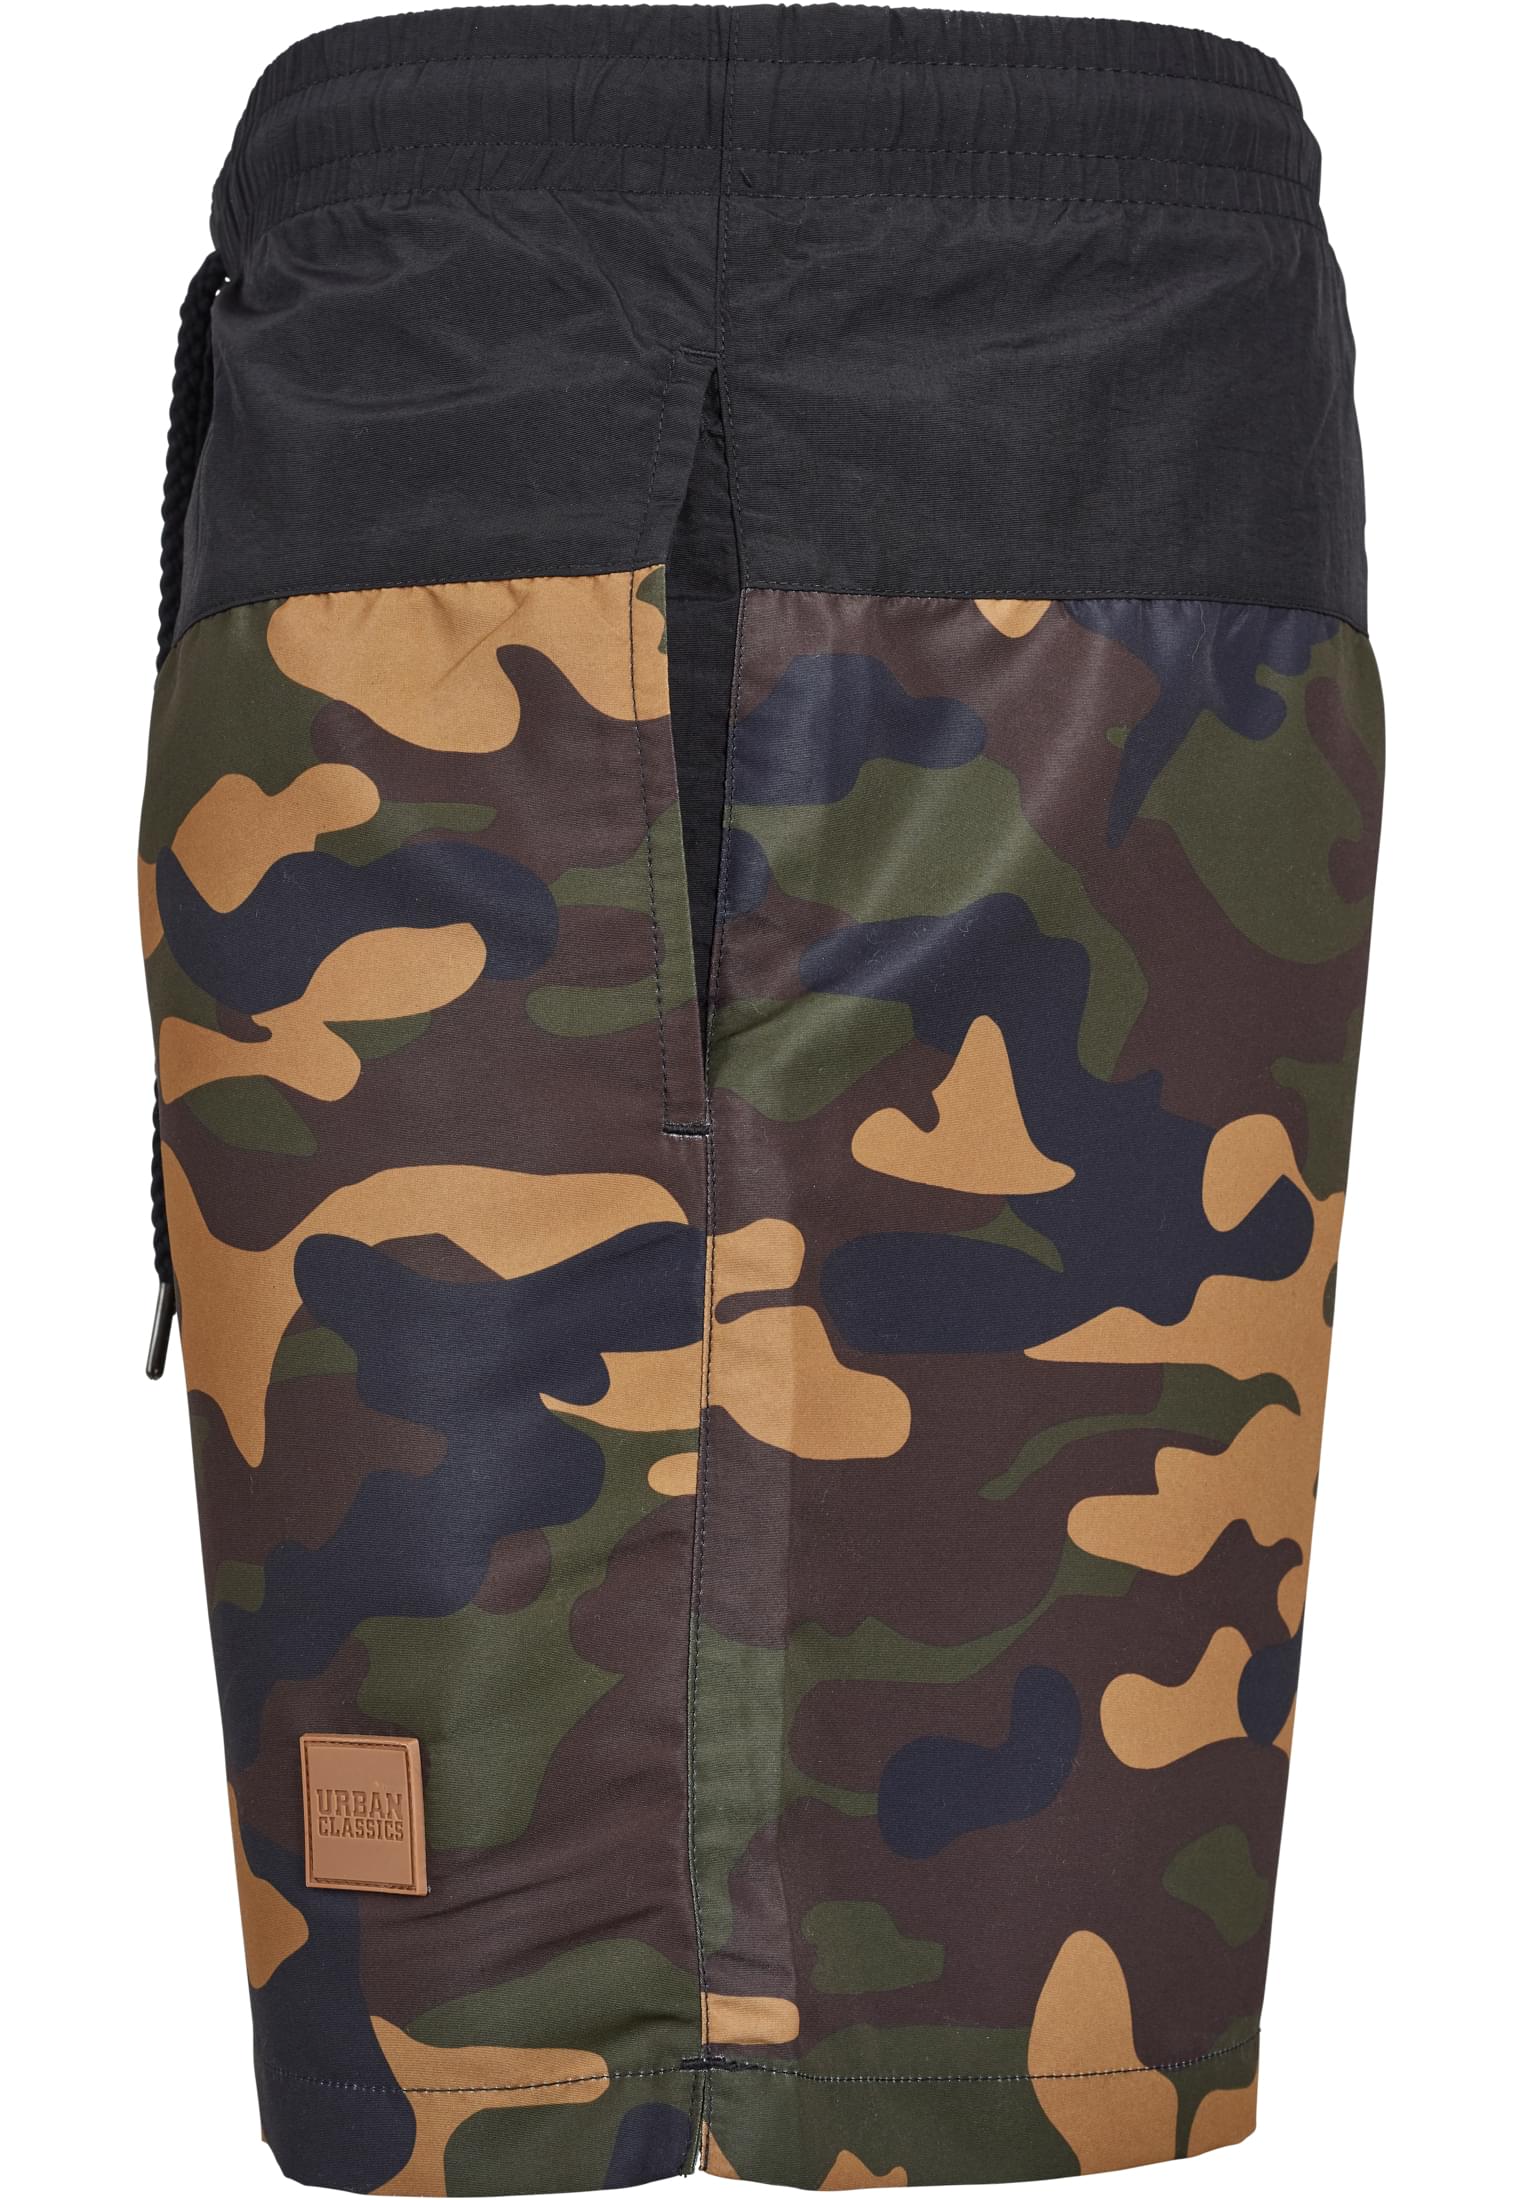 Plus Size Block Swim Shorts in Farbe blk/woodcamo